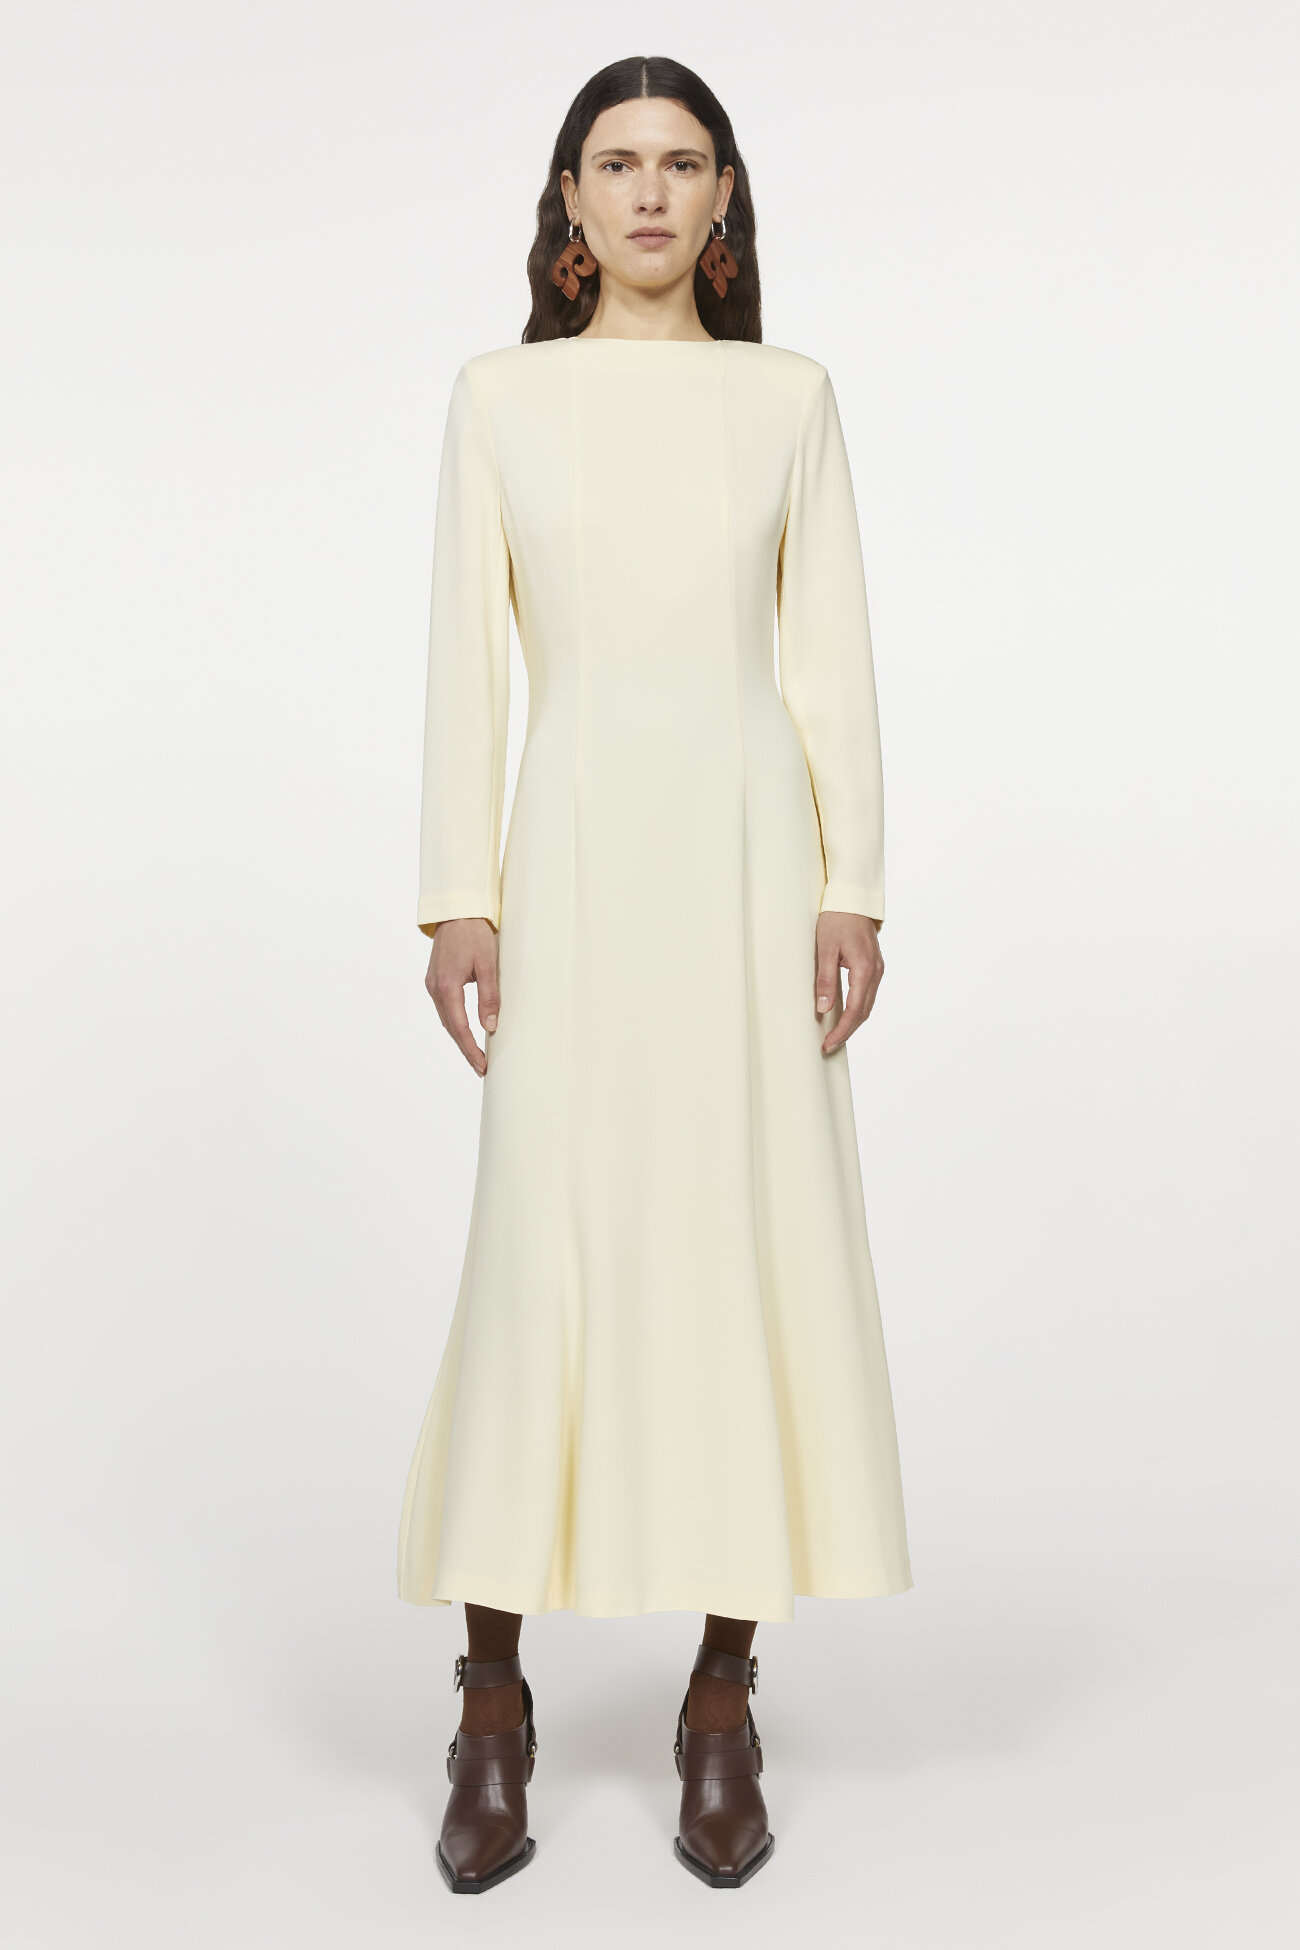 Isonda dress | Rodebjer.com